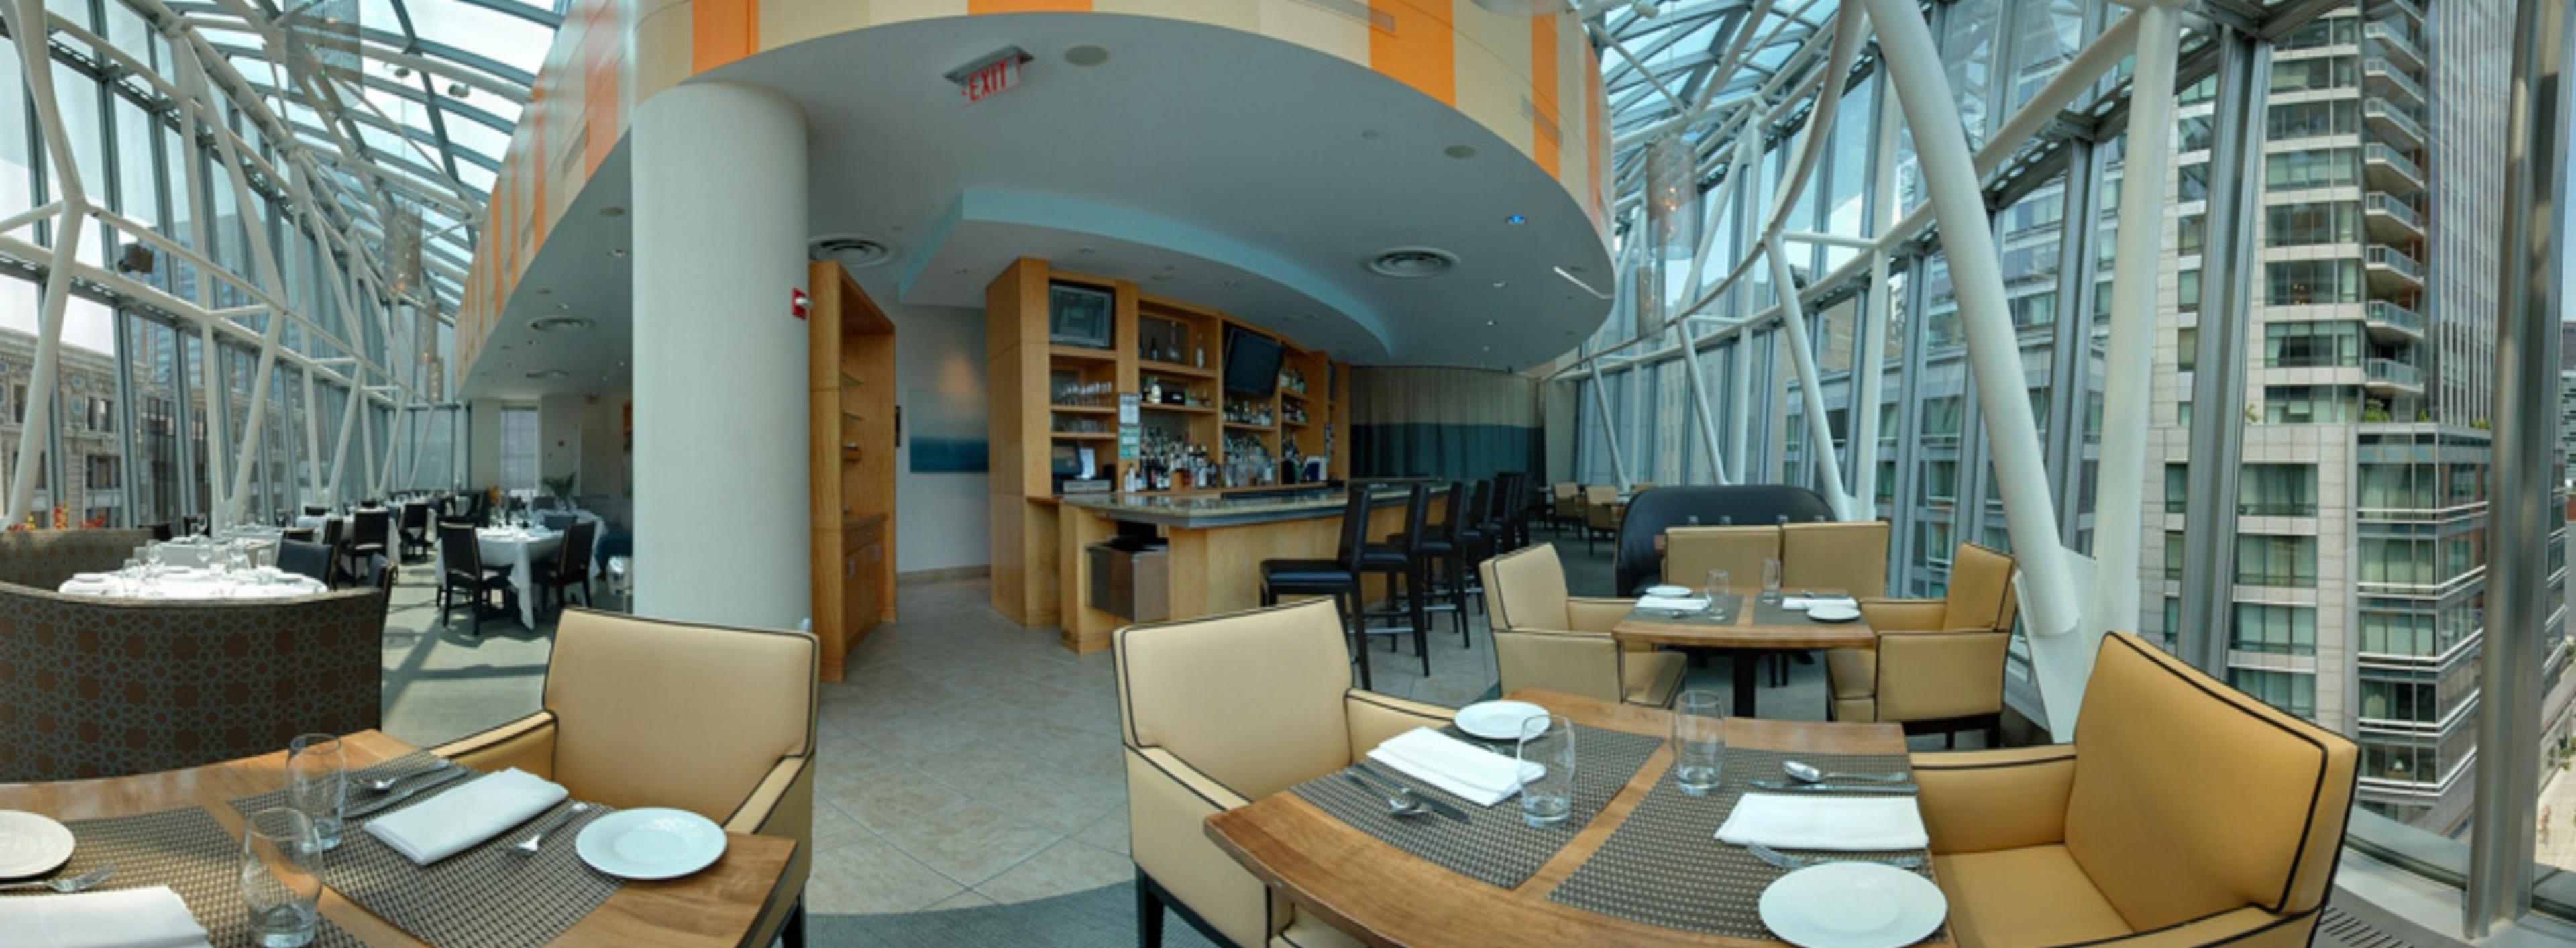 Blu Restaurant & Bar